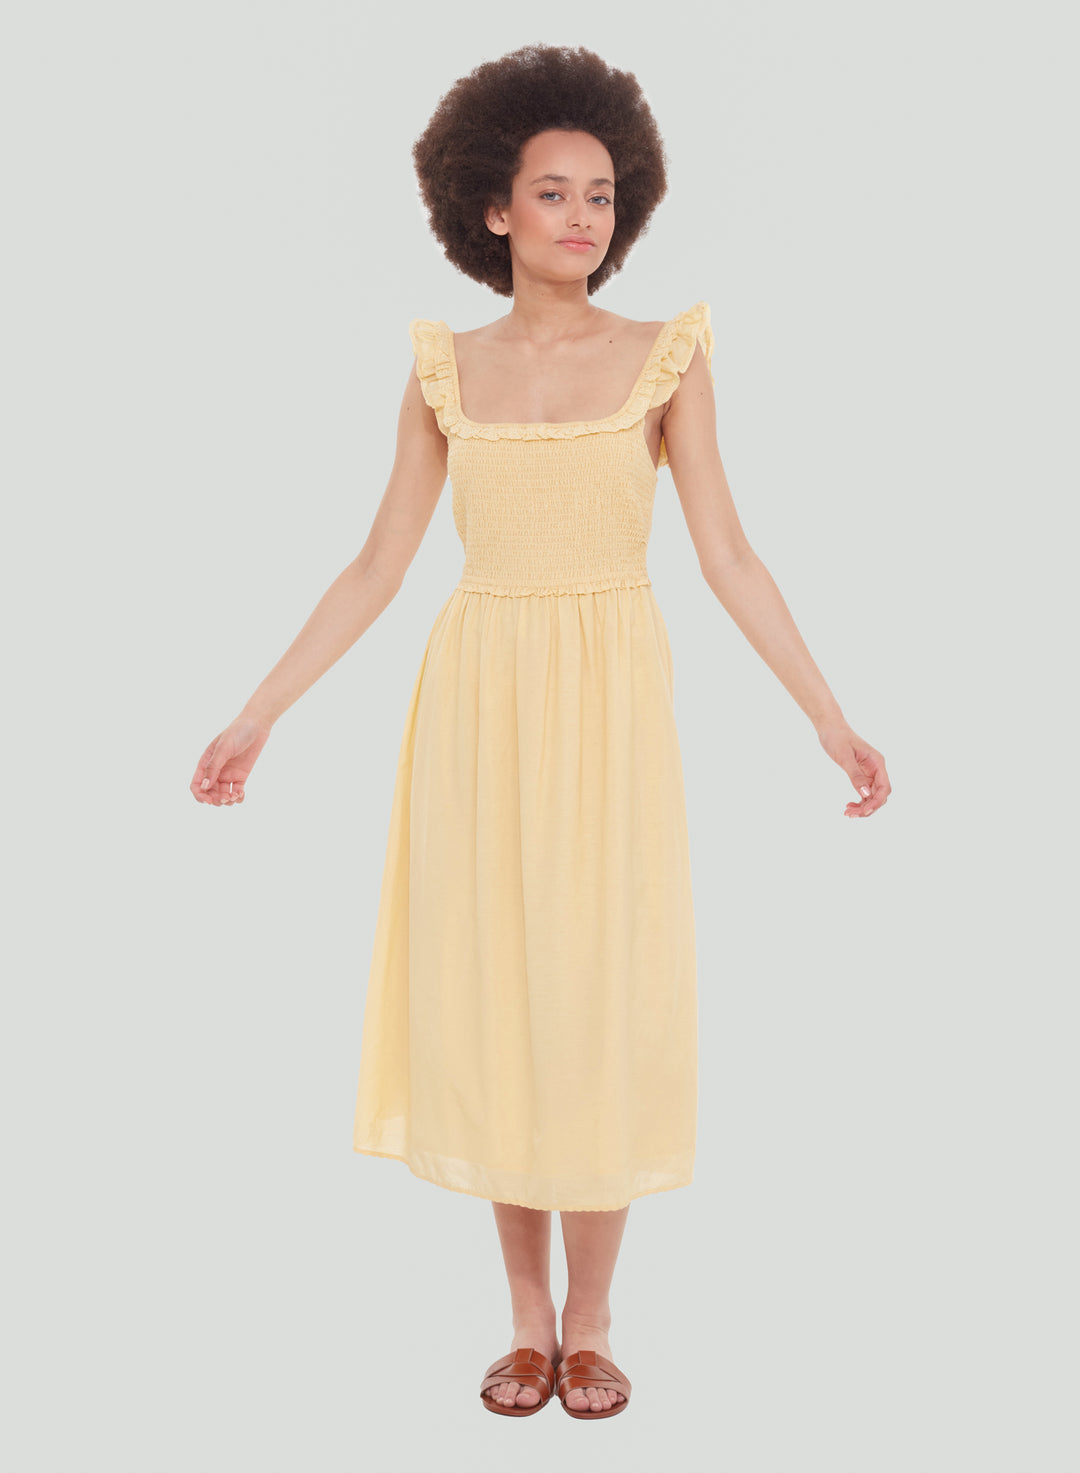 Soft Yellow Sleeveless Dress